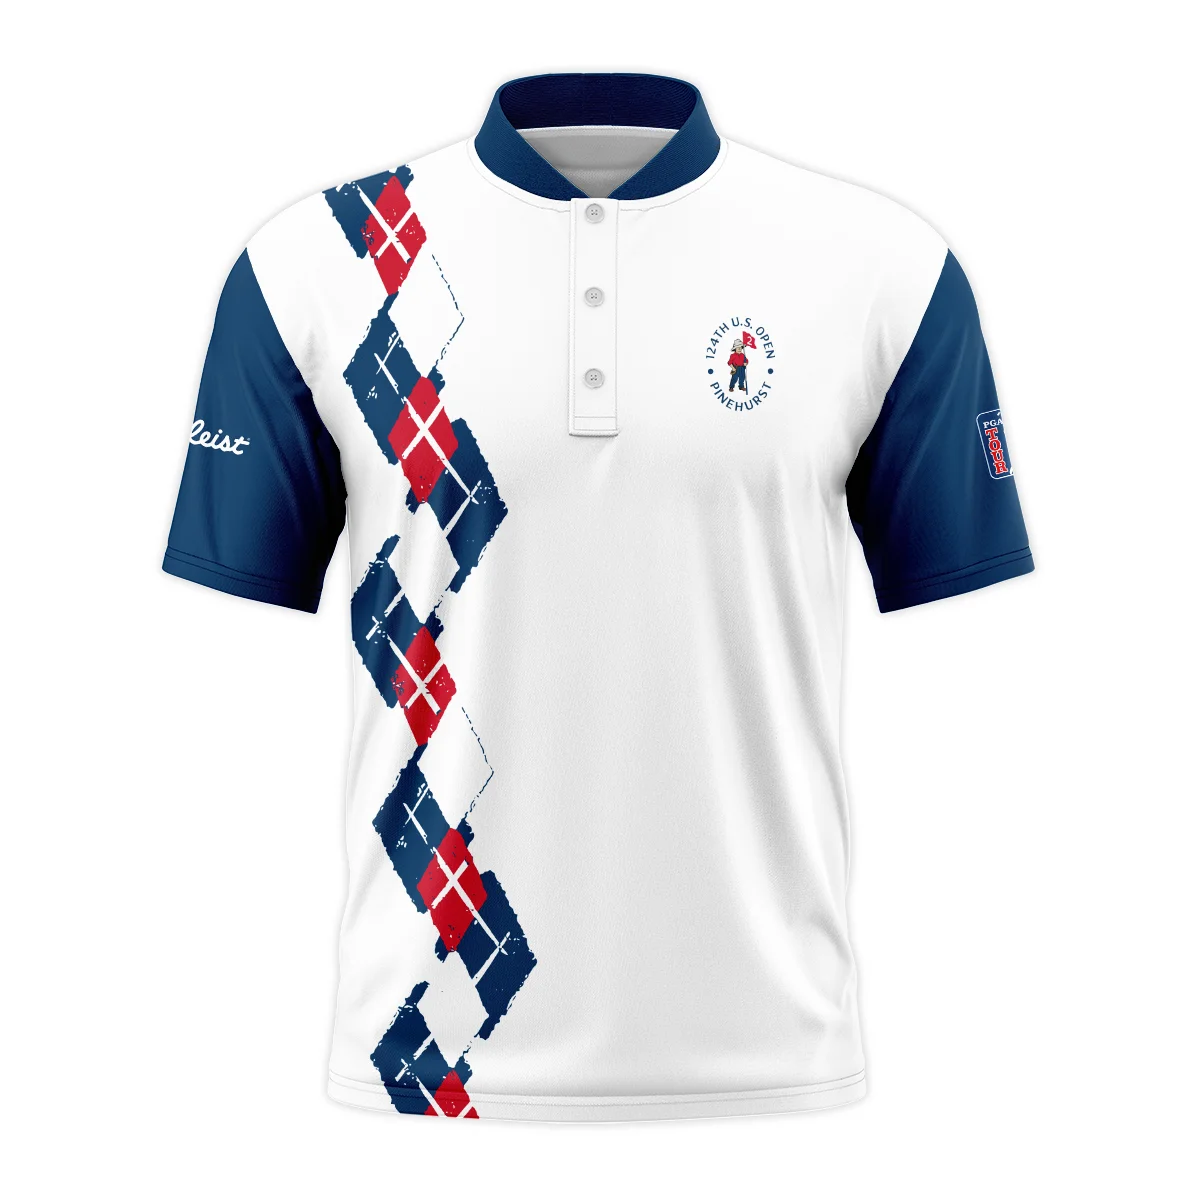 Golf Sport Pattern Blue Mix Color 124th U.S. Open Pinehurst Titlest Quarter-Zip Jacket Style Classic